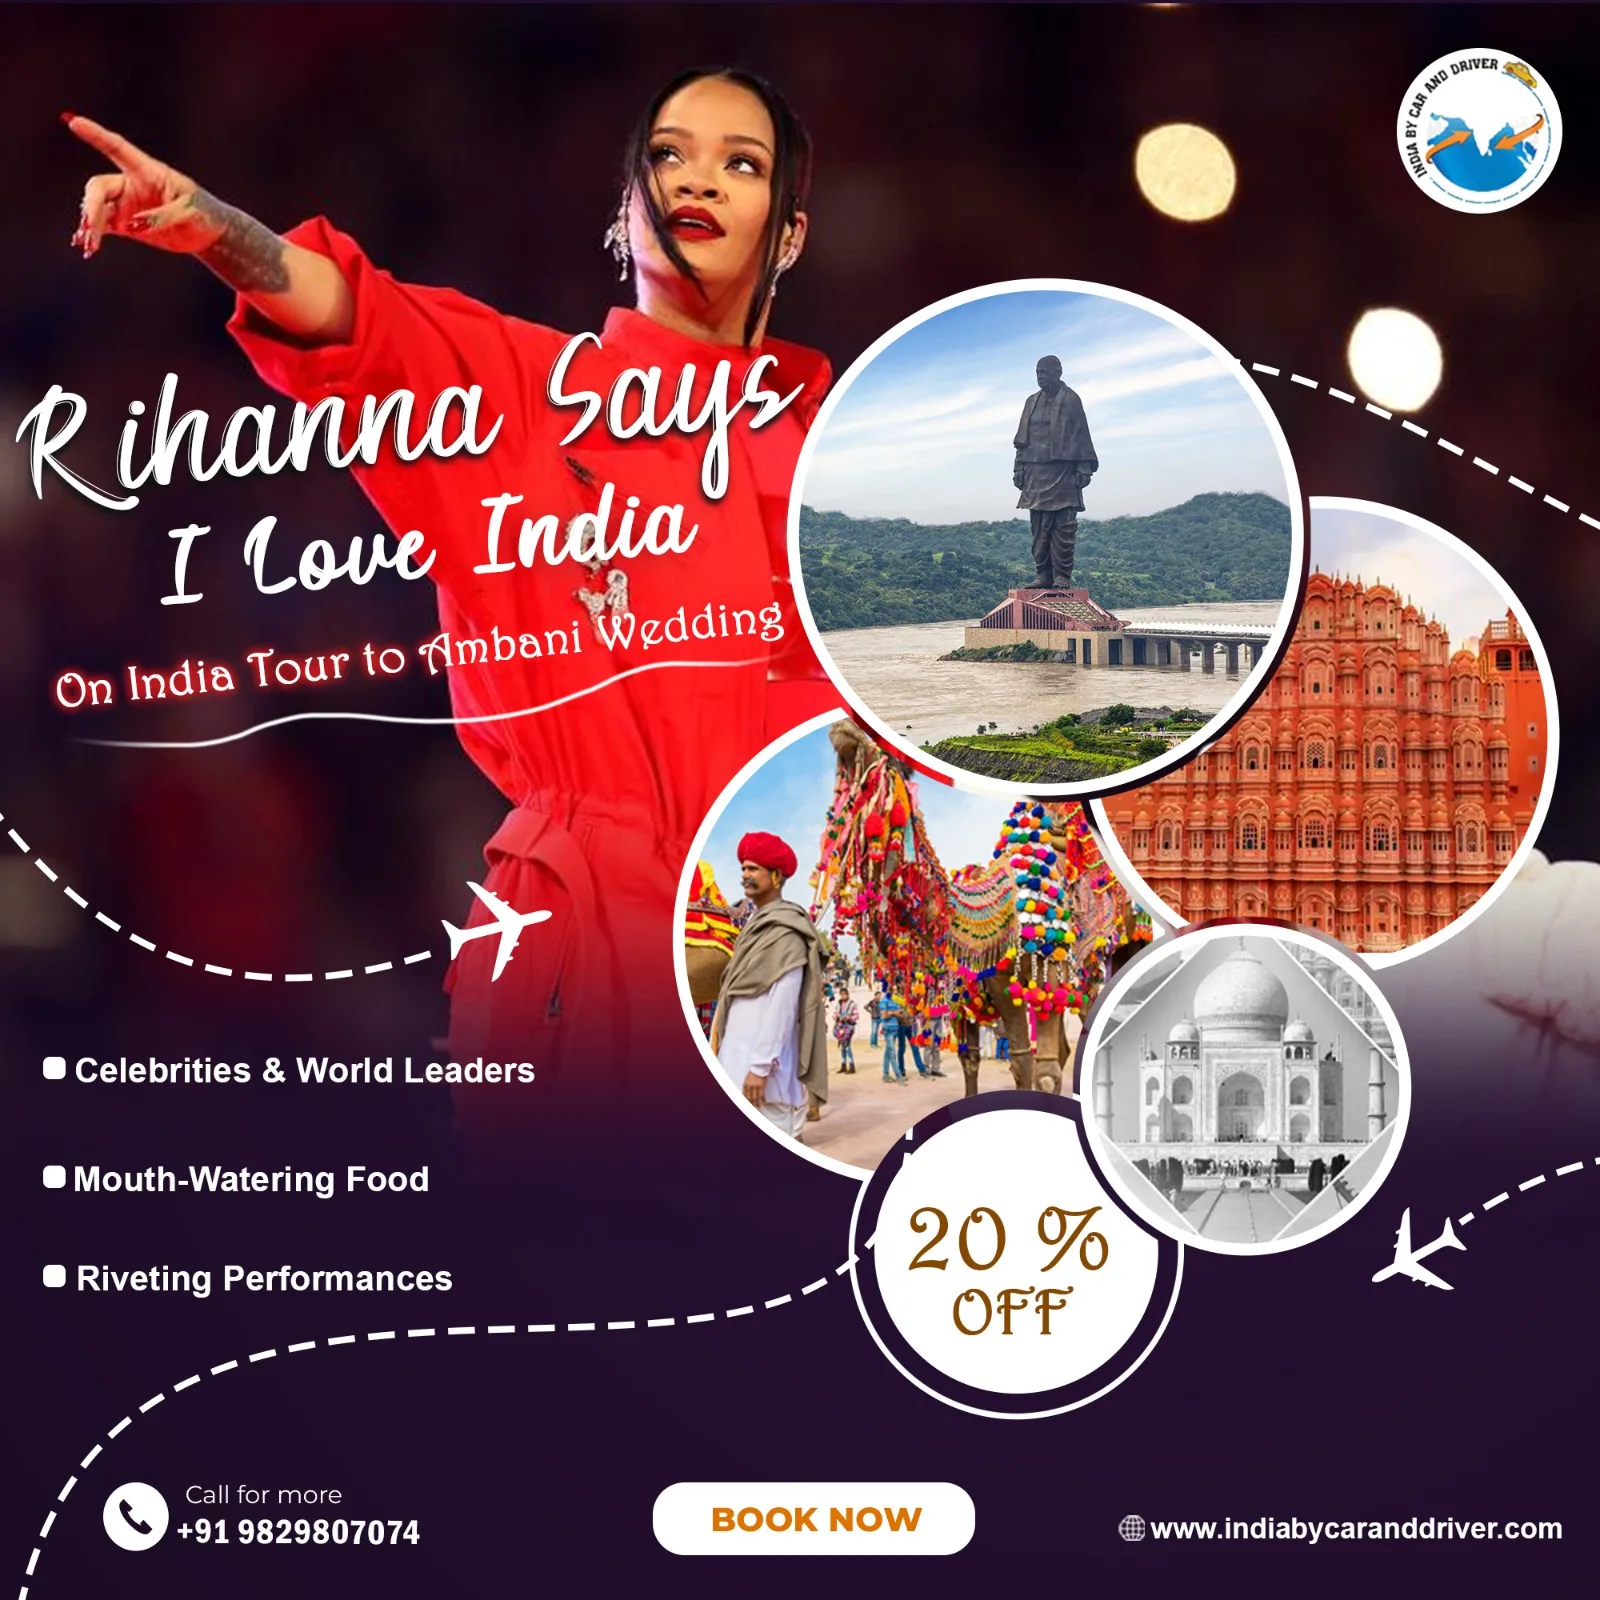 Rihanna says “I Love India” on India Trip to Anant Ambani Pre-Wedding Party